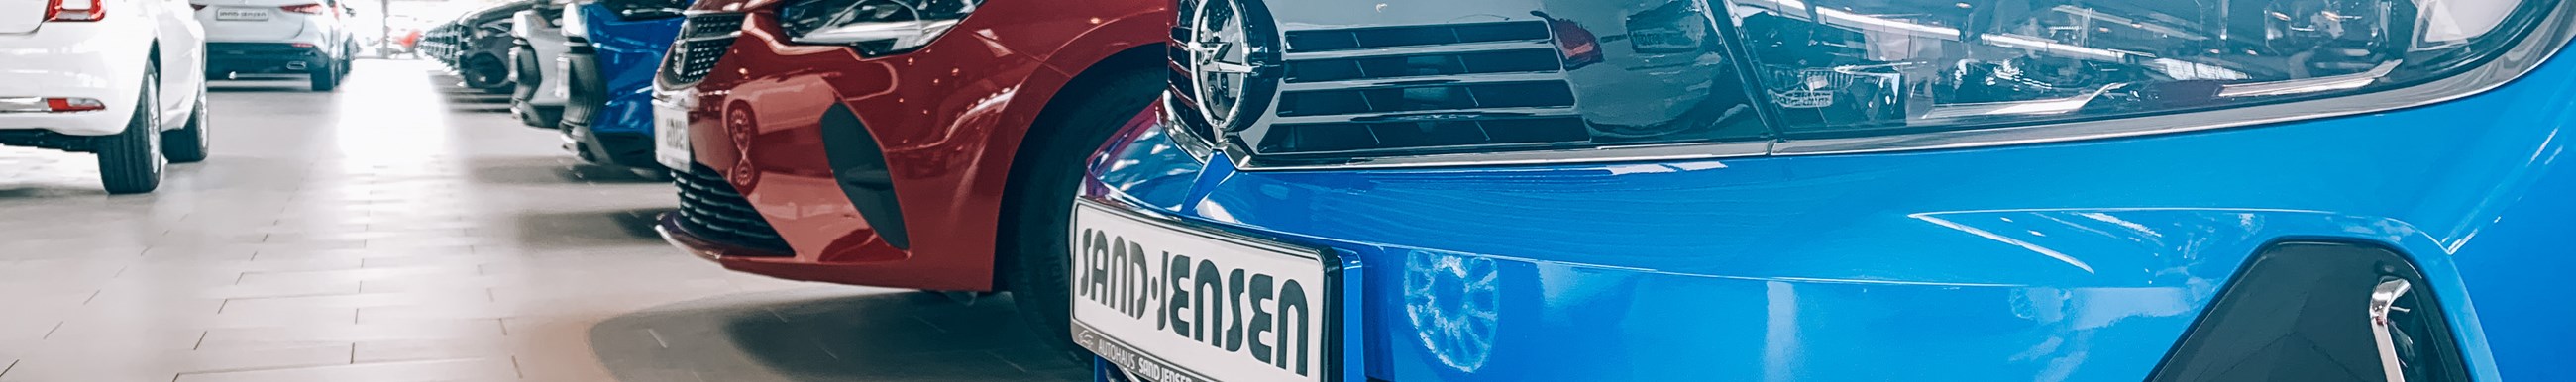 Opel-Fahrzeuge im Autohaus Sandjensen - Frontansicht